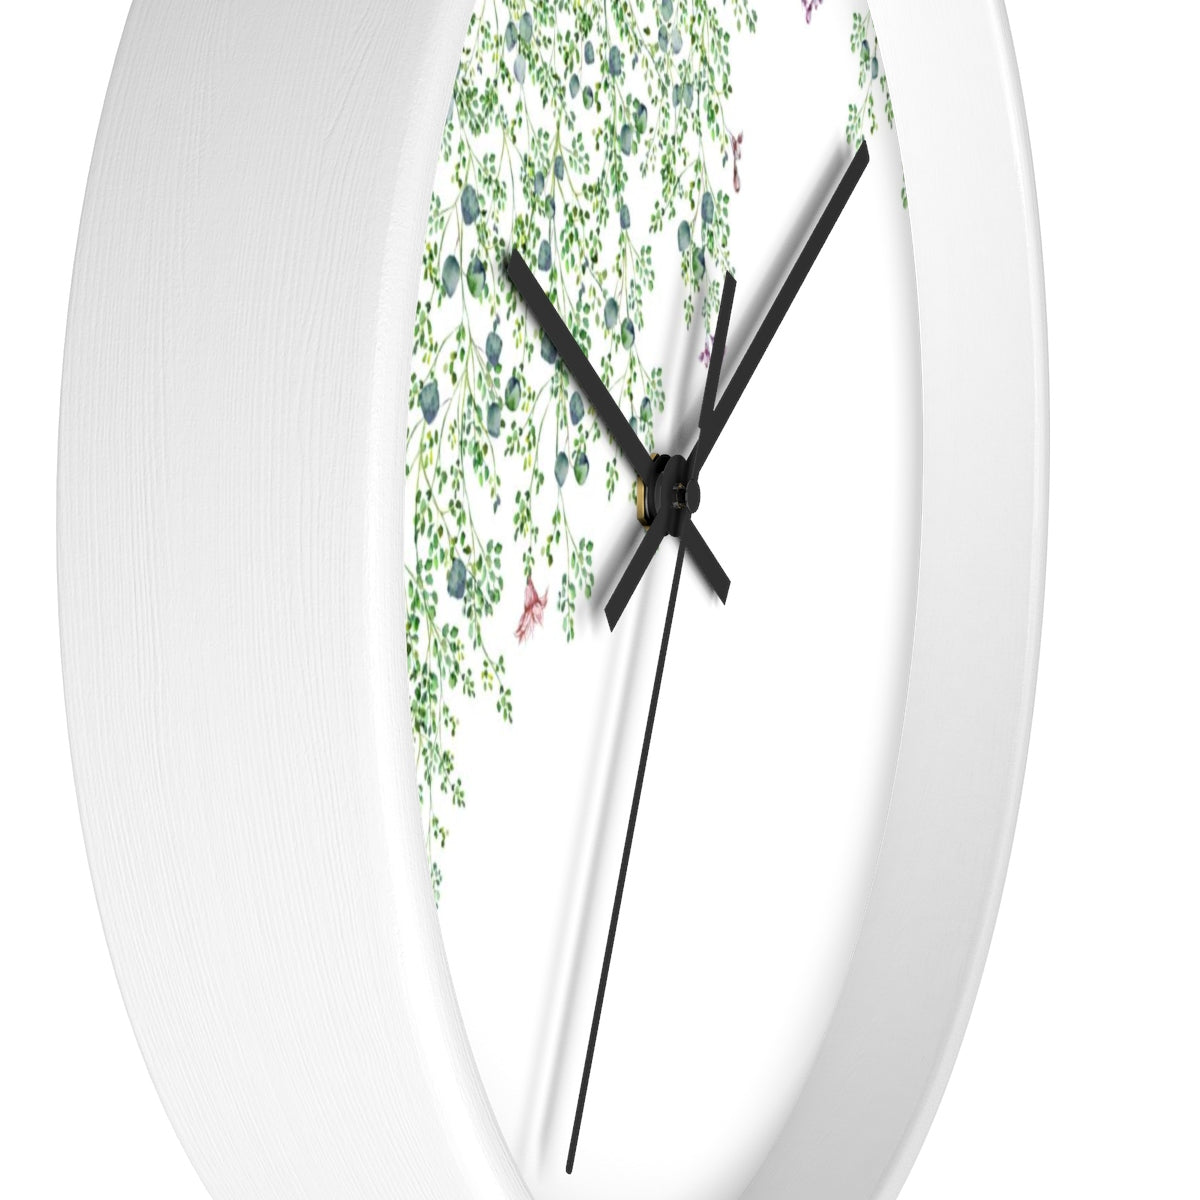 Minimalist Leaves Wall Clock - Liz Kapiloto Art & Design